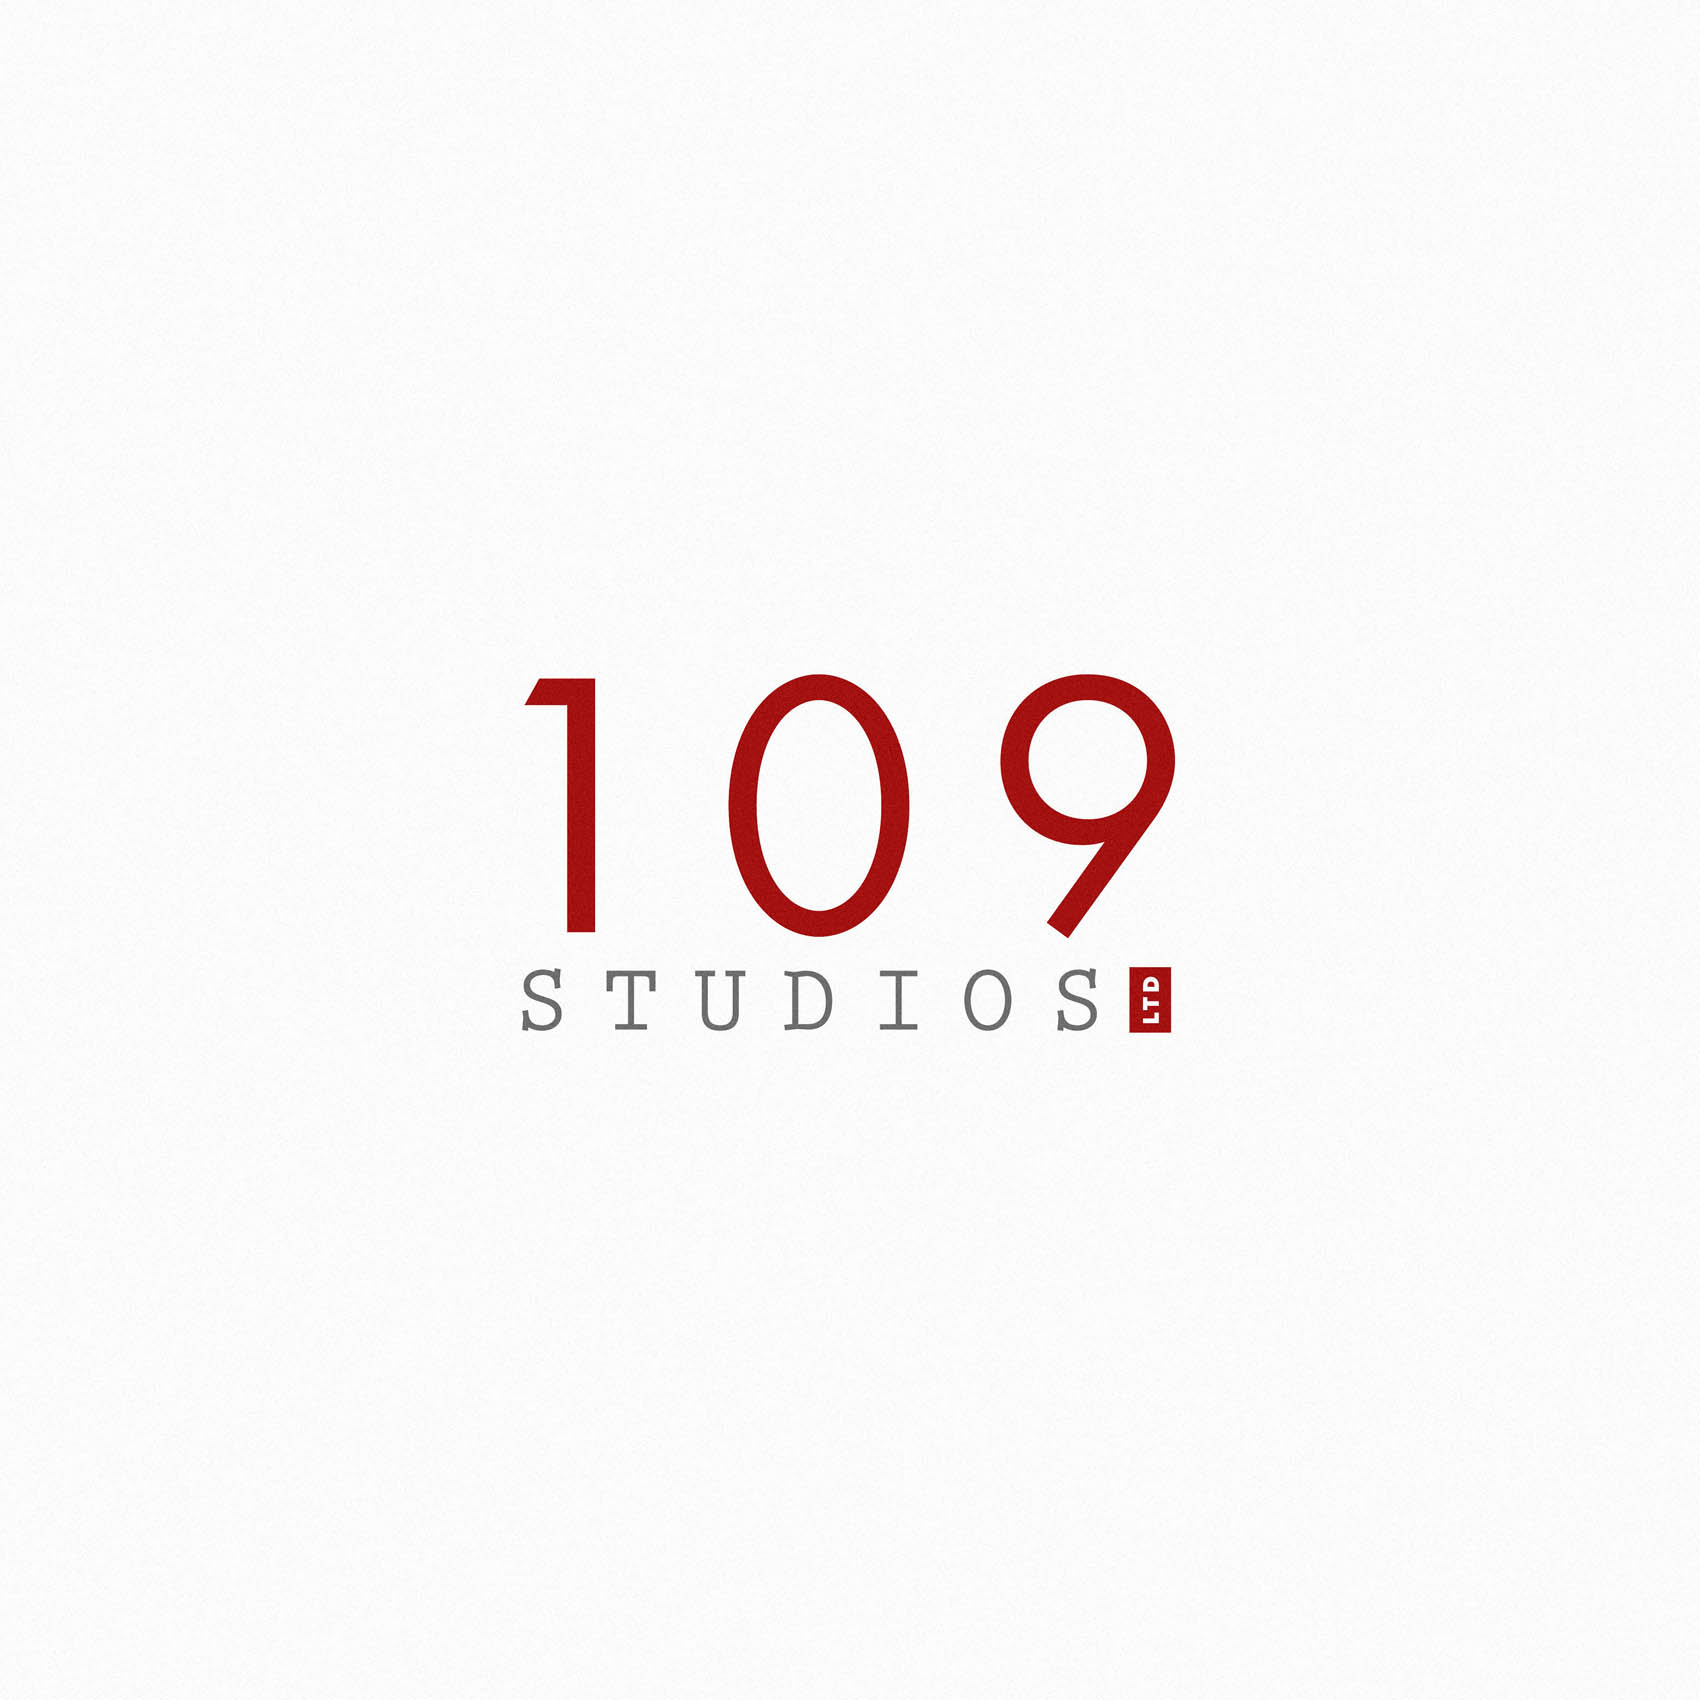 109 Studios film industry logo screenwriter branding10